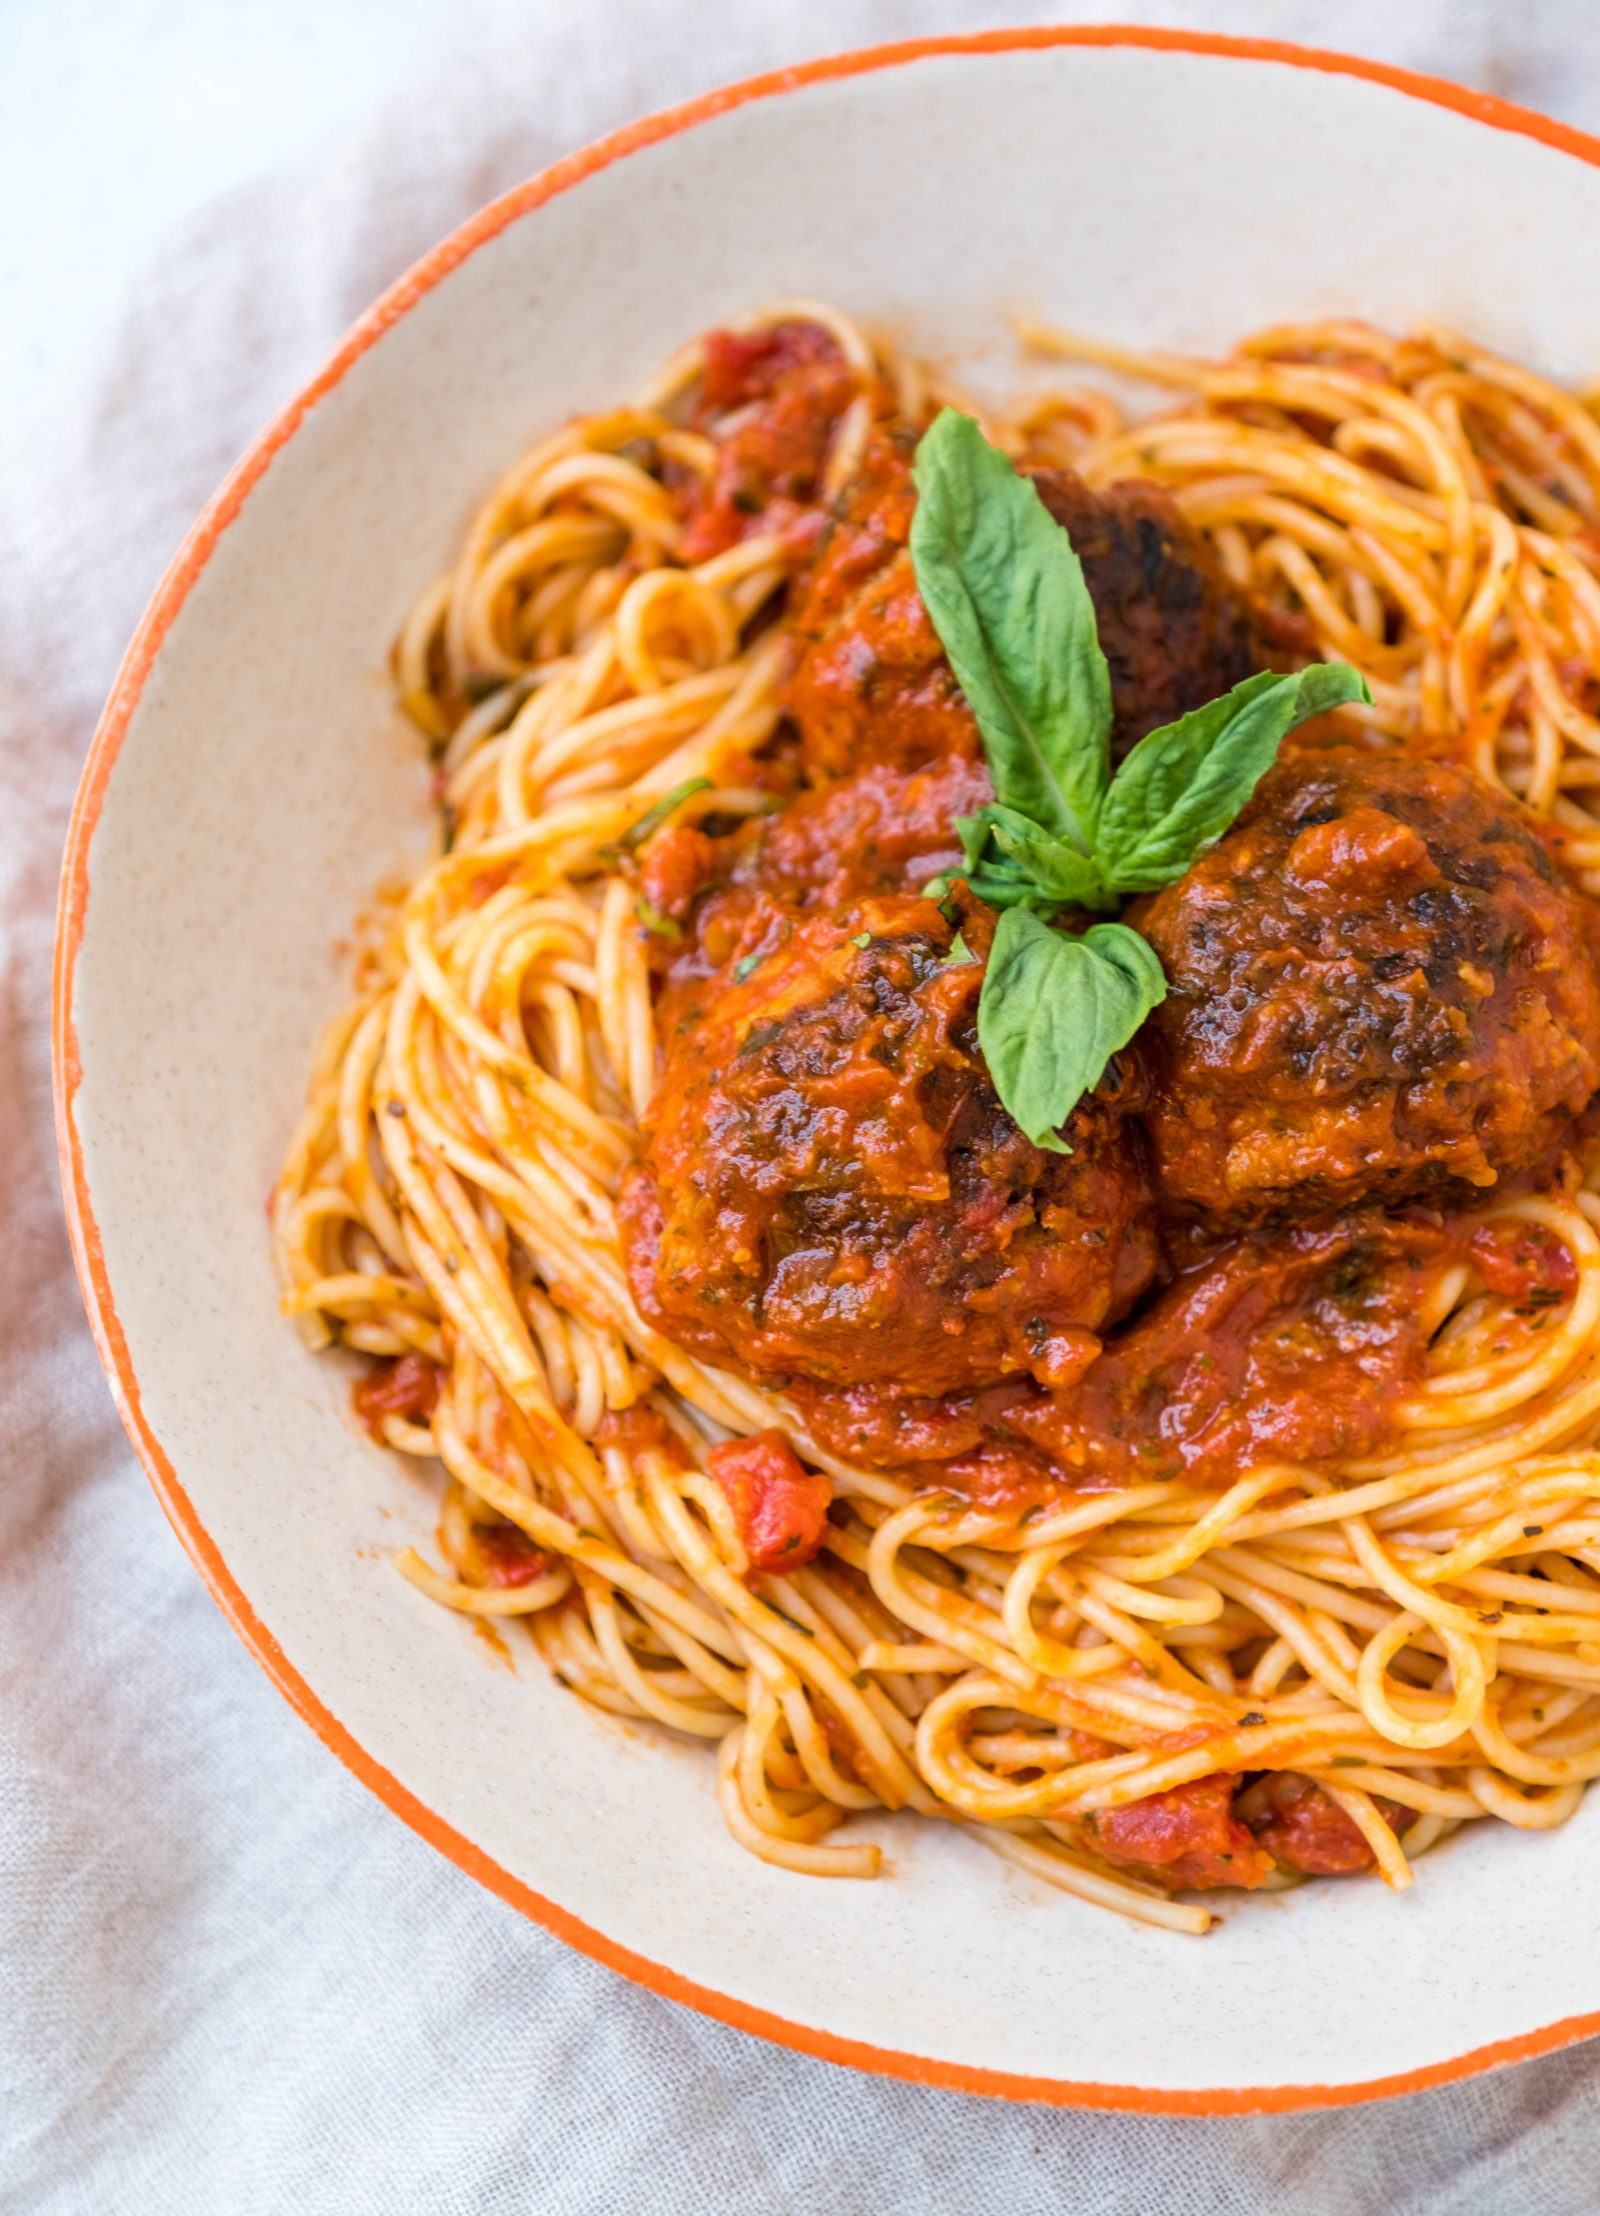 Spaghetti with Turkey Meatballs – The Food Joy